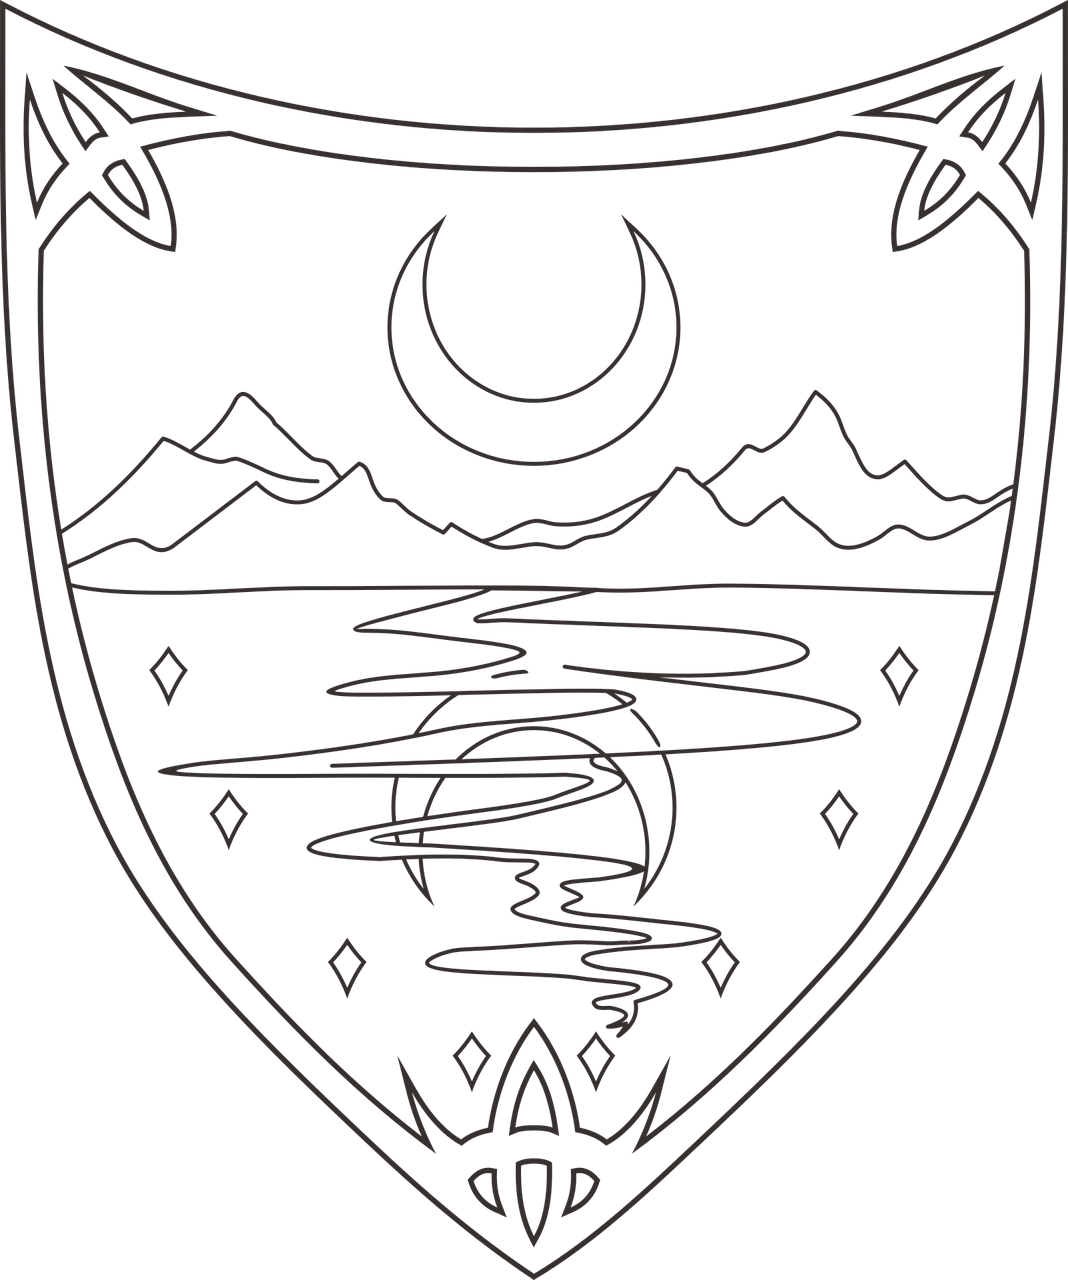 waterdeep coat of arms symbol free photo